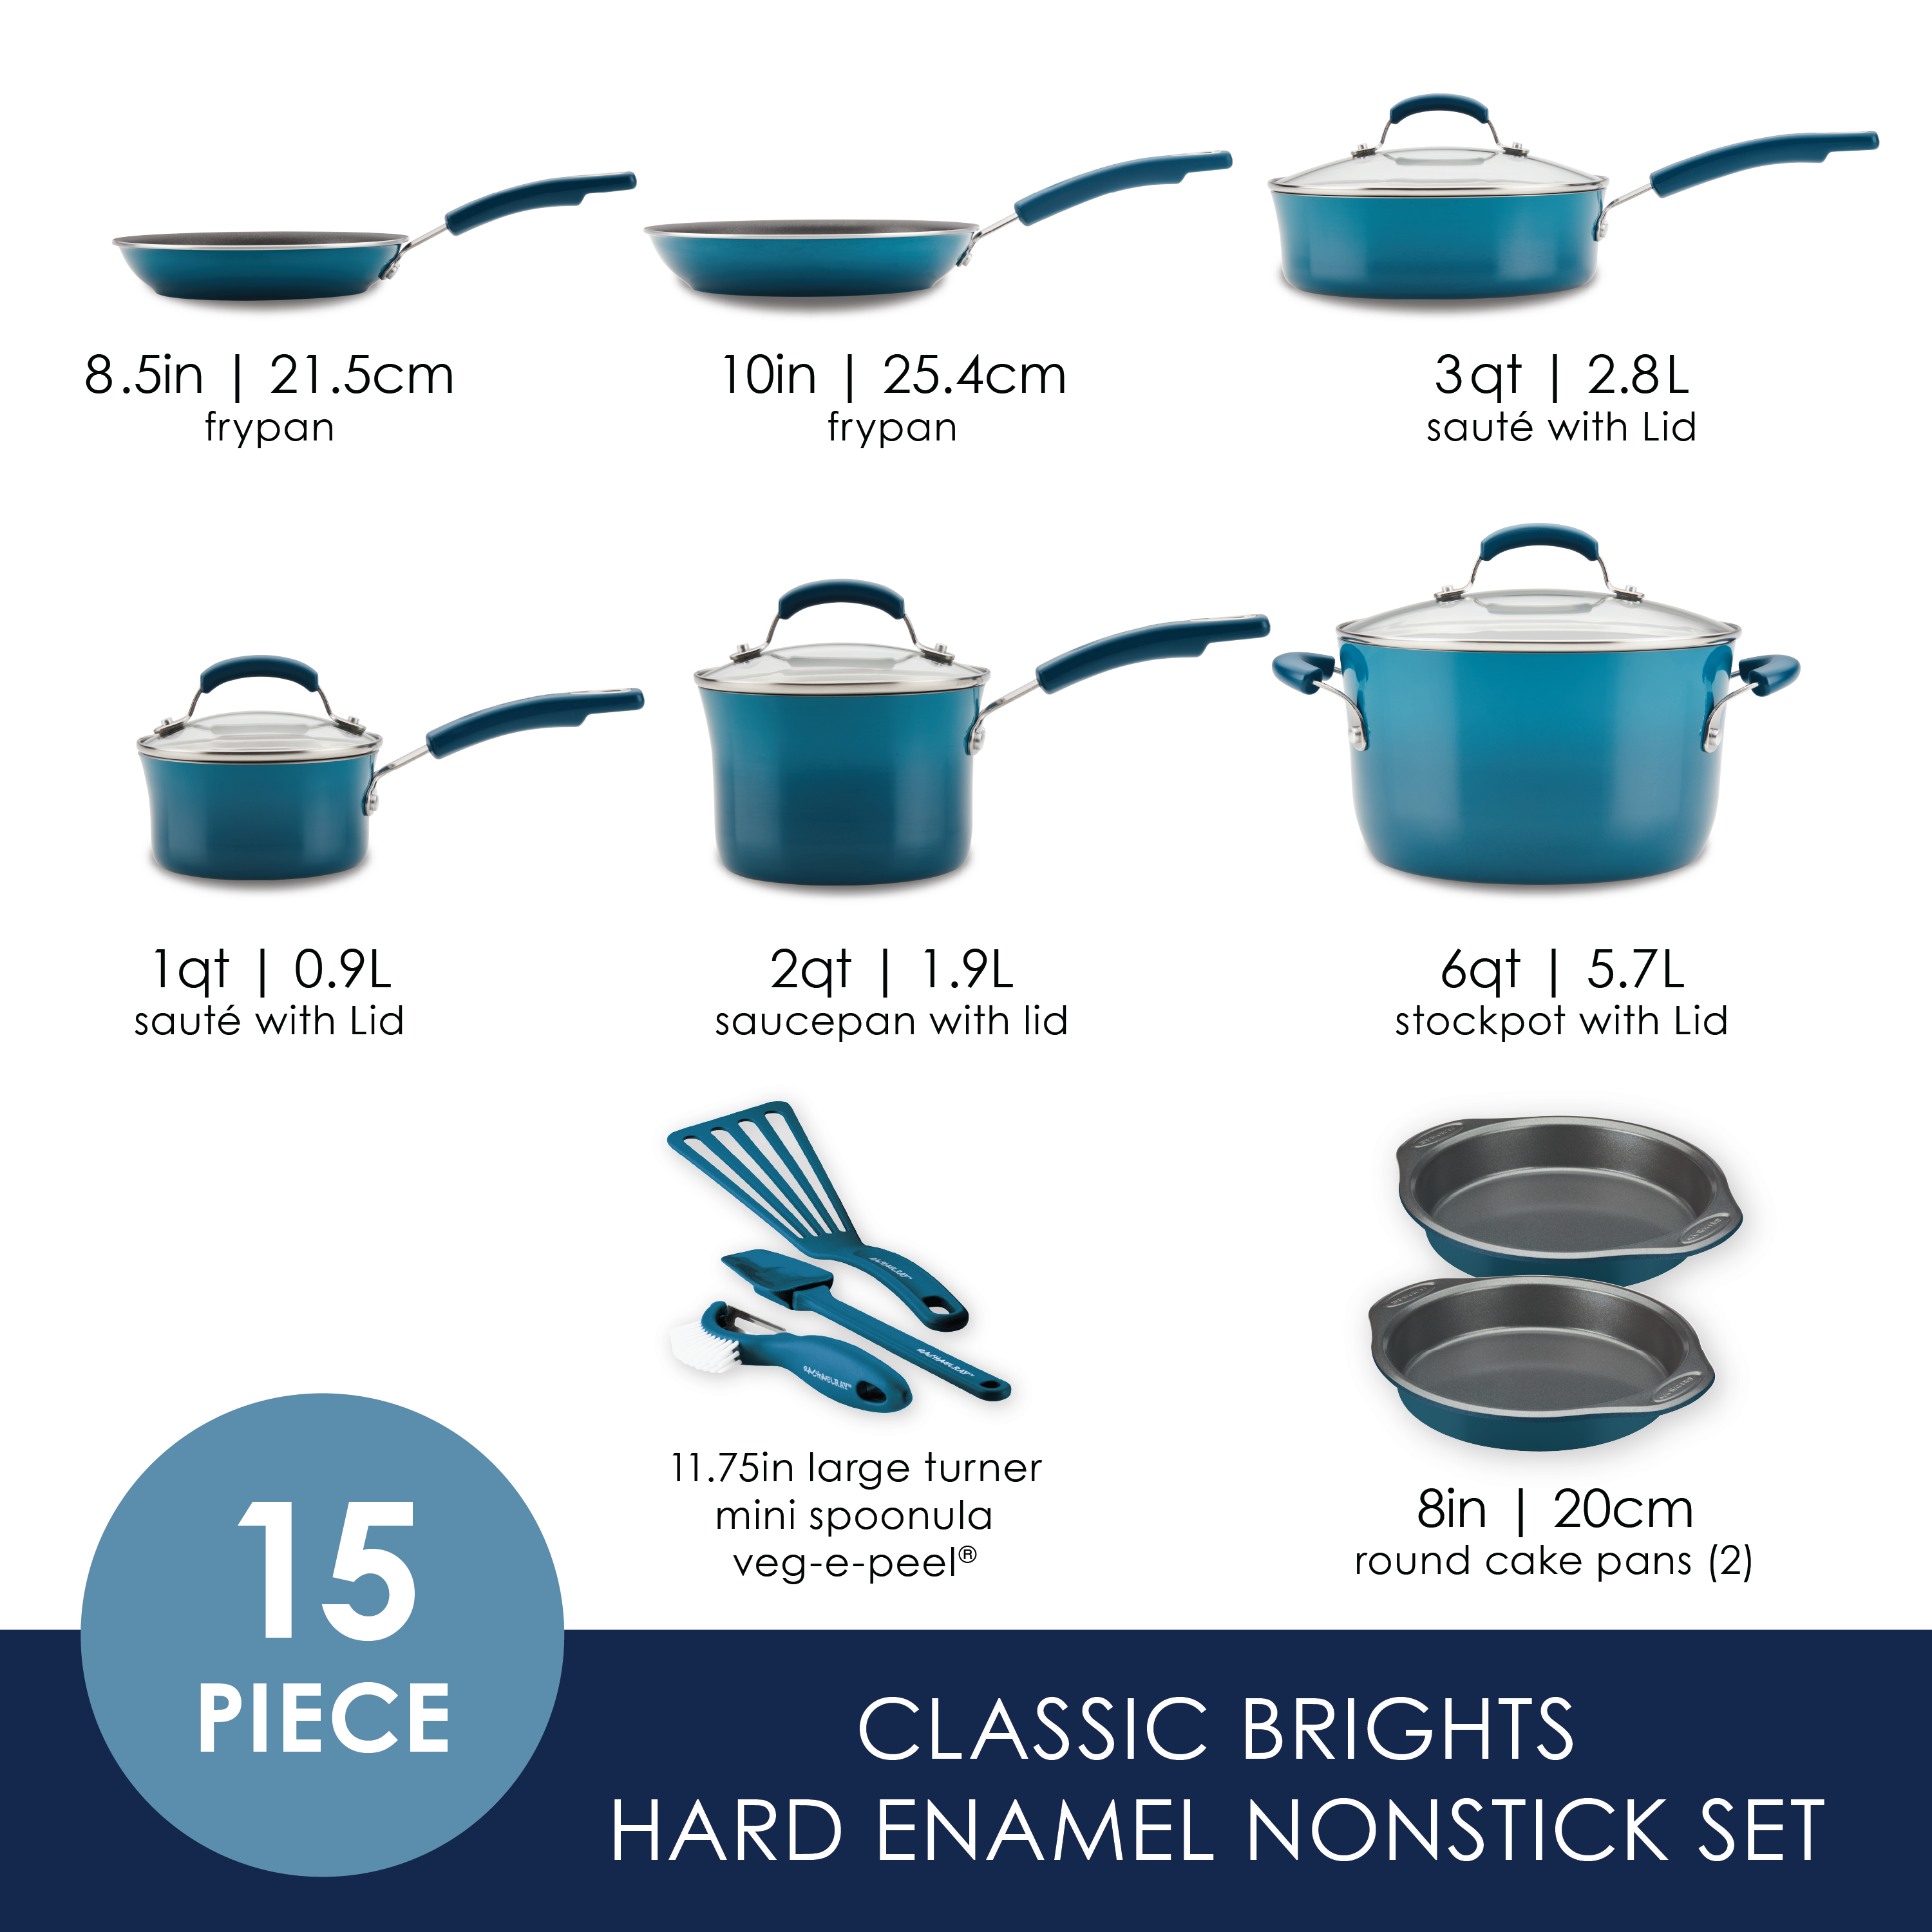 Rachael Ray Hard Enamel Nonstick 14 Piece Cookware Set - The